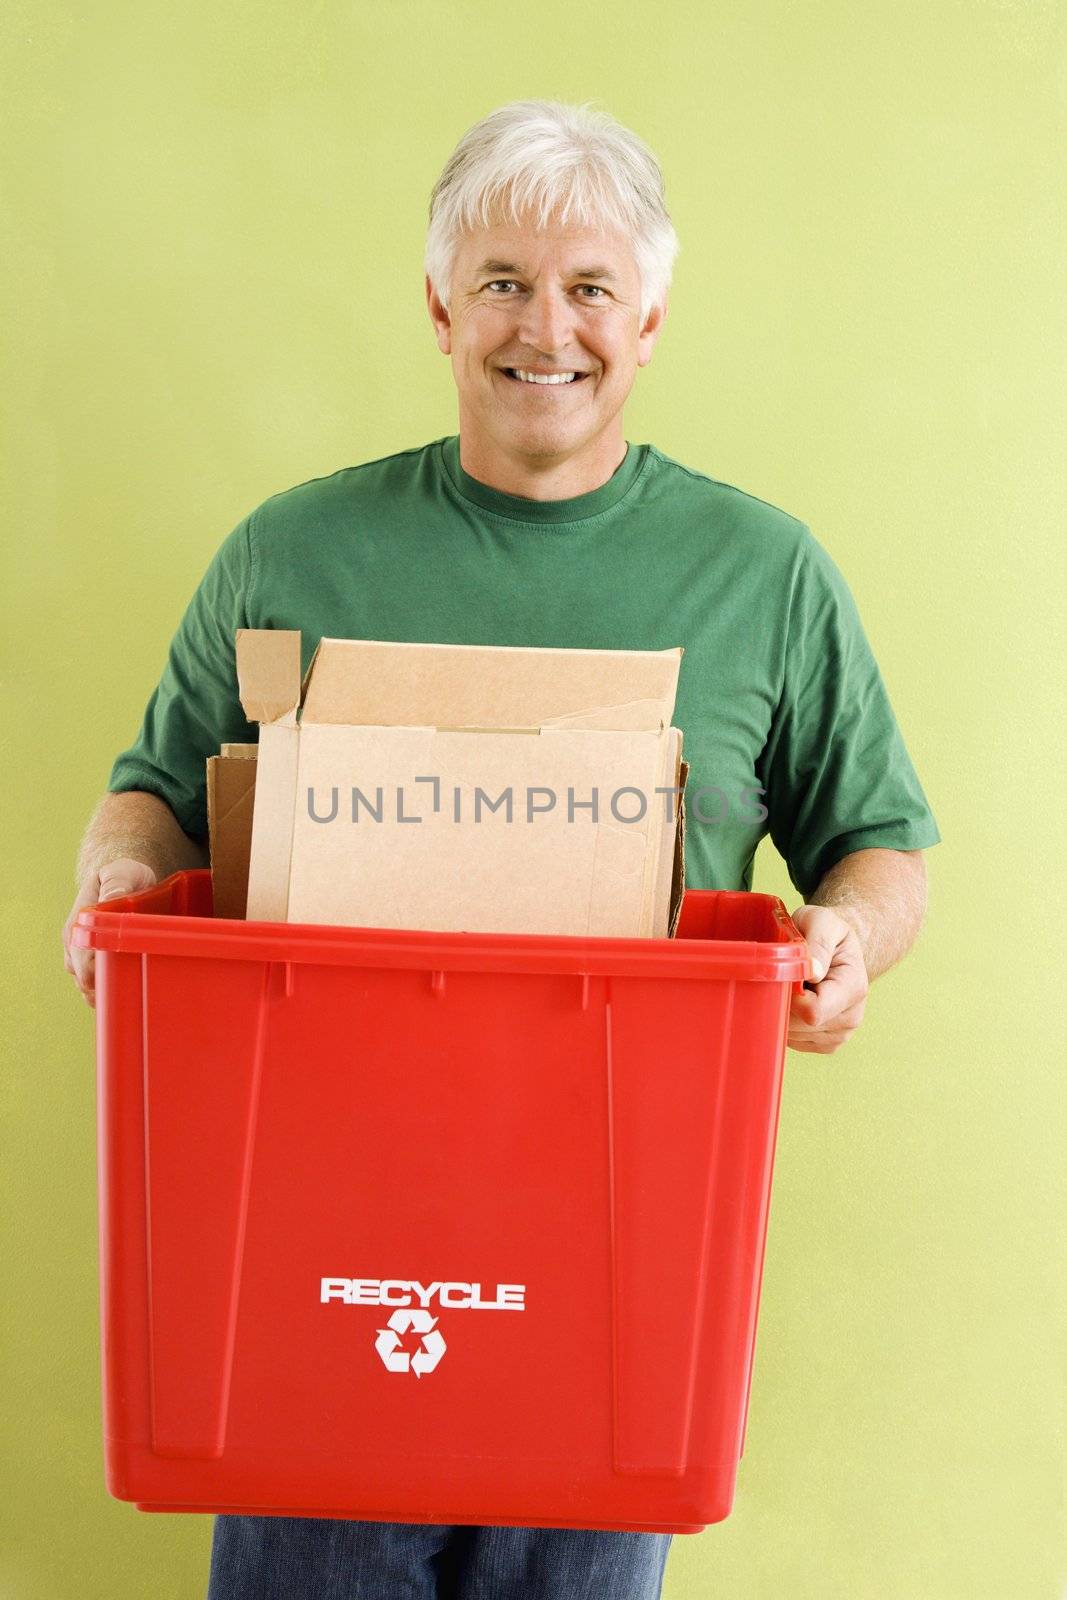 Man with recycling bin. by iofoto